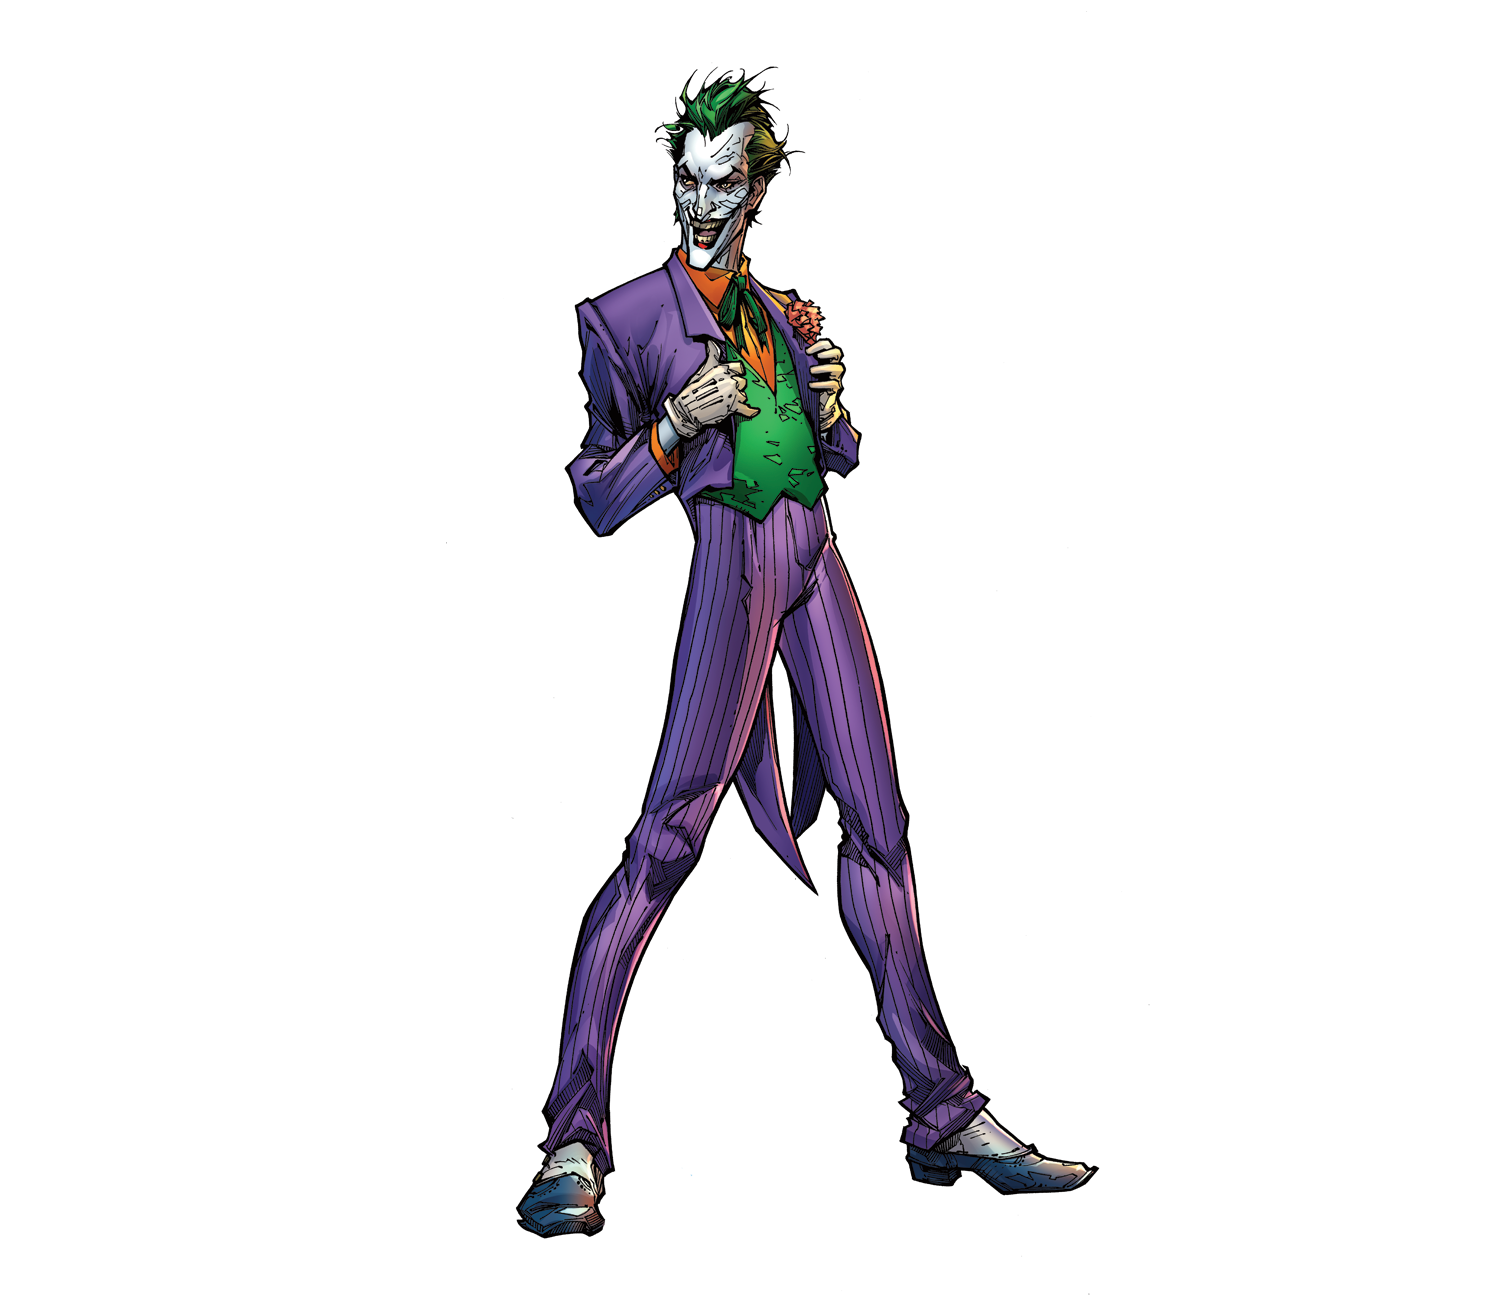 The Joker - PNG by DanielWarn